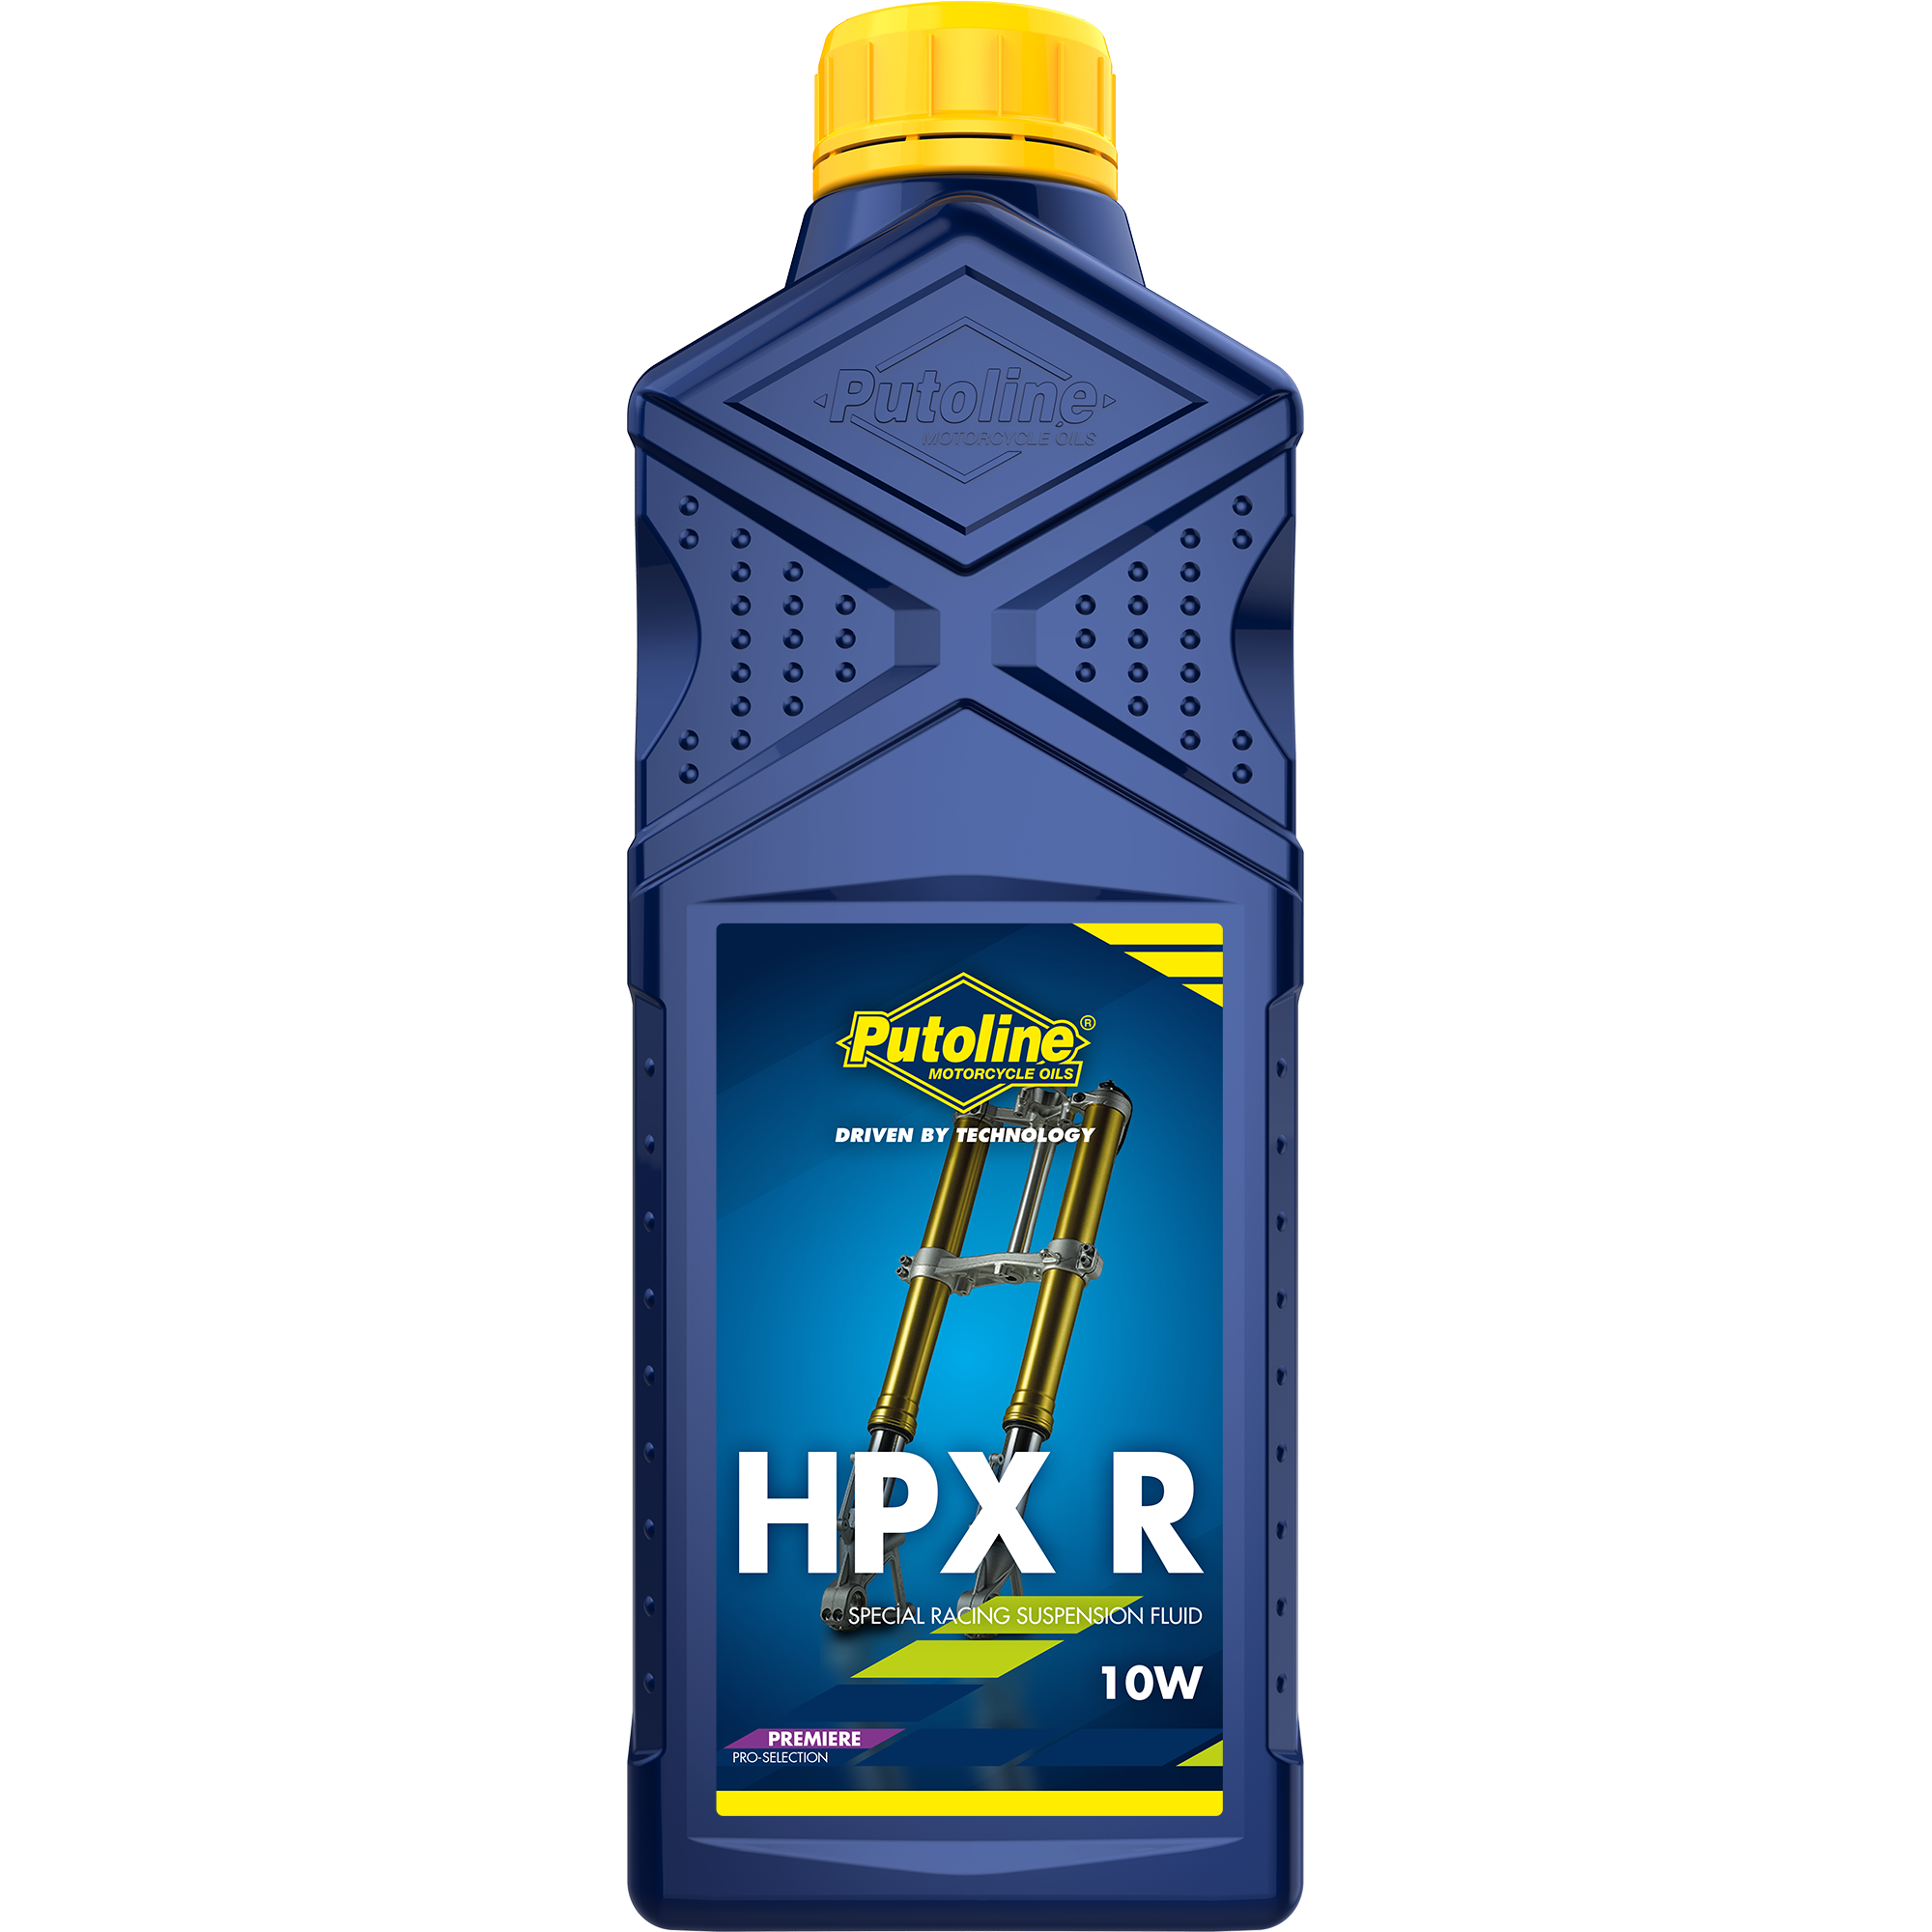 Putoline HPX R 10W, 12 x 1 lt detail 2